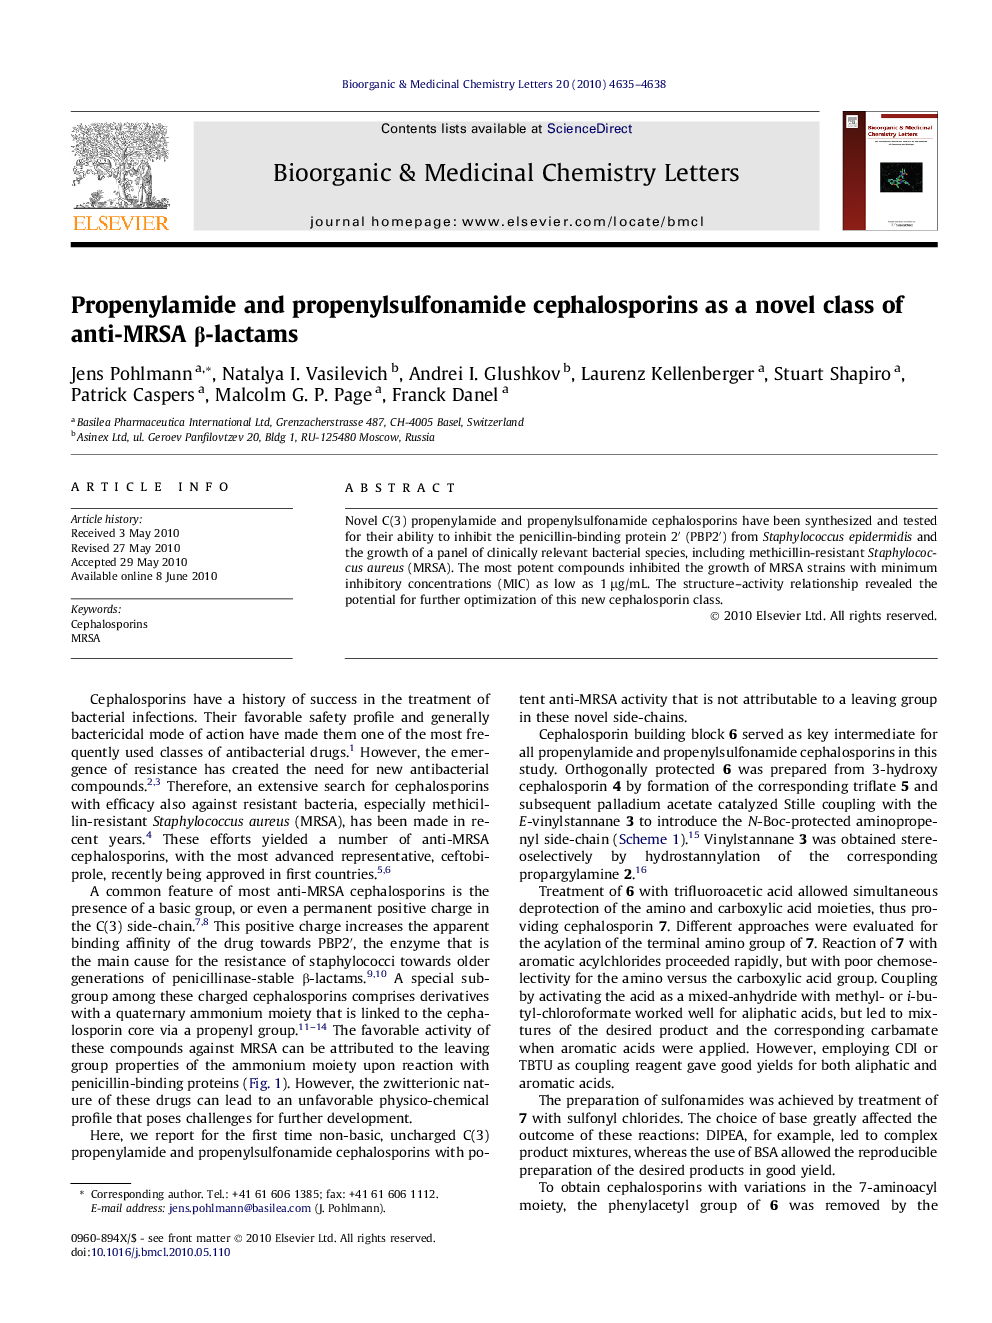 Propenylamide and propenylsulfonamide cephalosporins as a novel class of anti-MRSA Î²-lactams